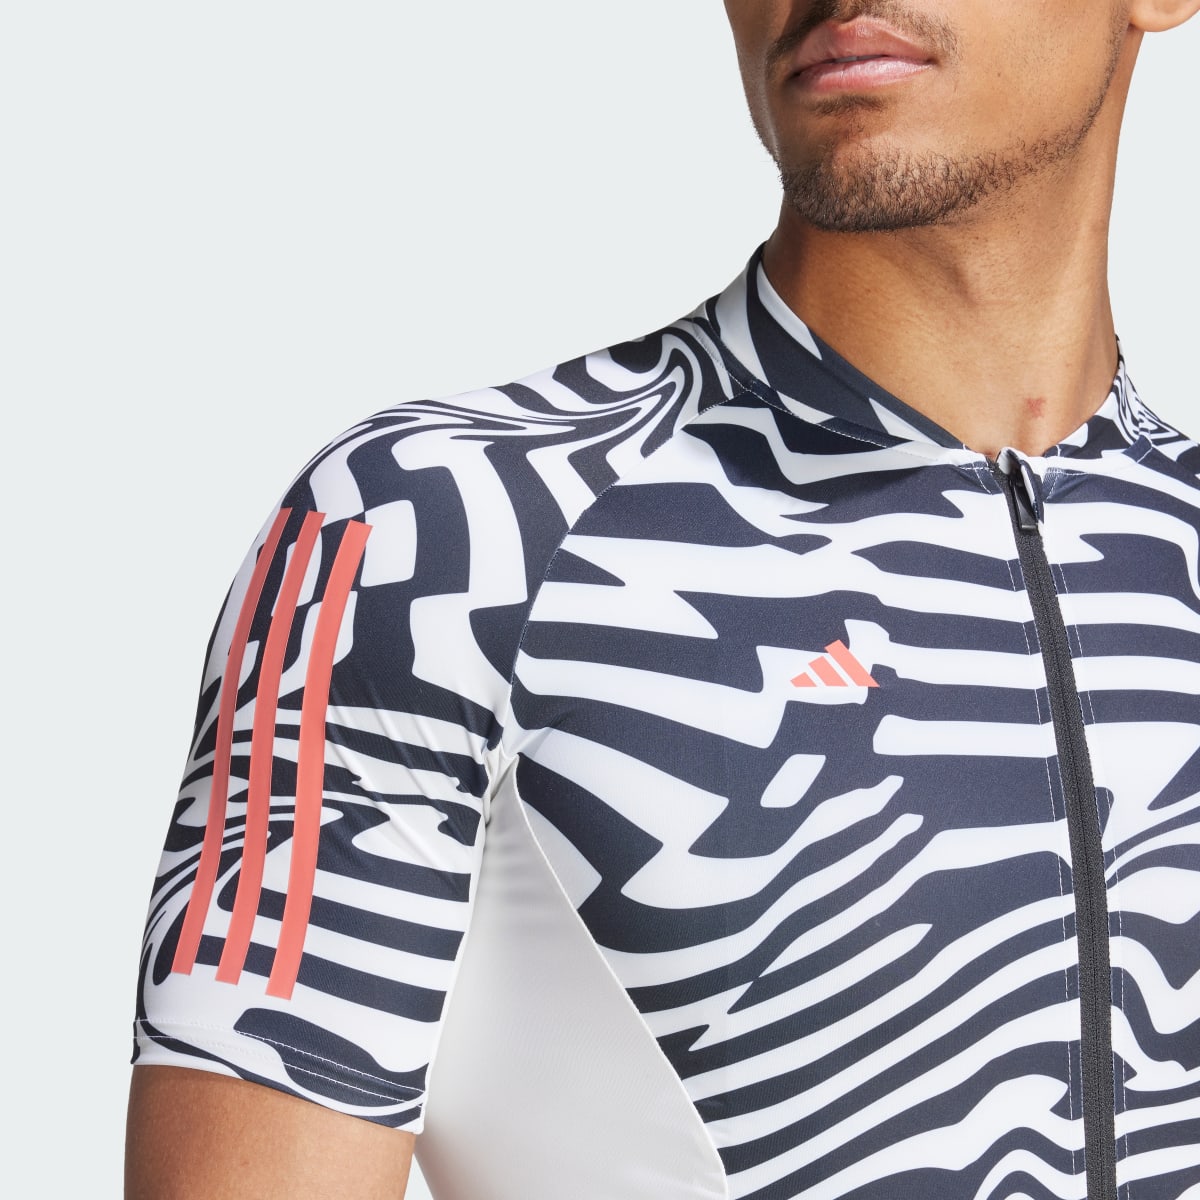 Adidas Essentials 3-Stripes Fast Zebra Cycling Jersey. 7